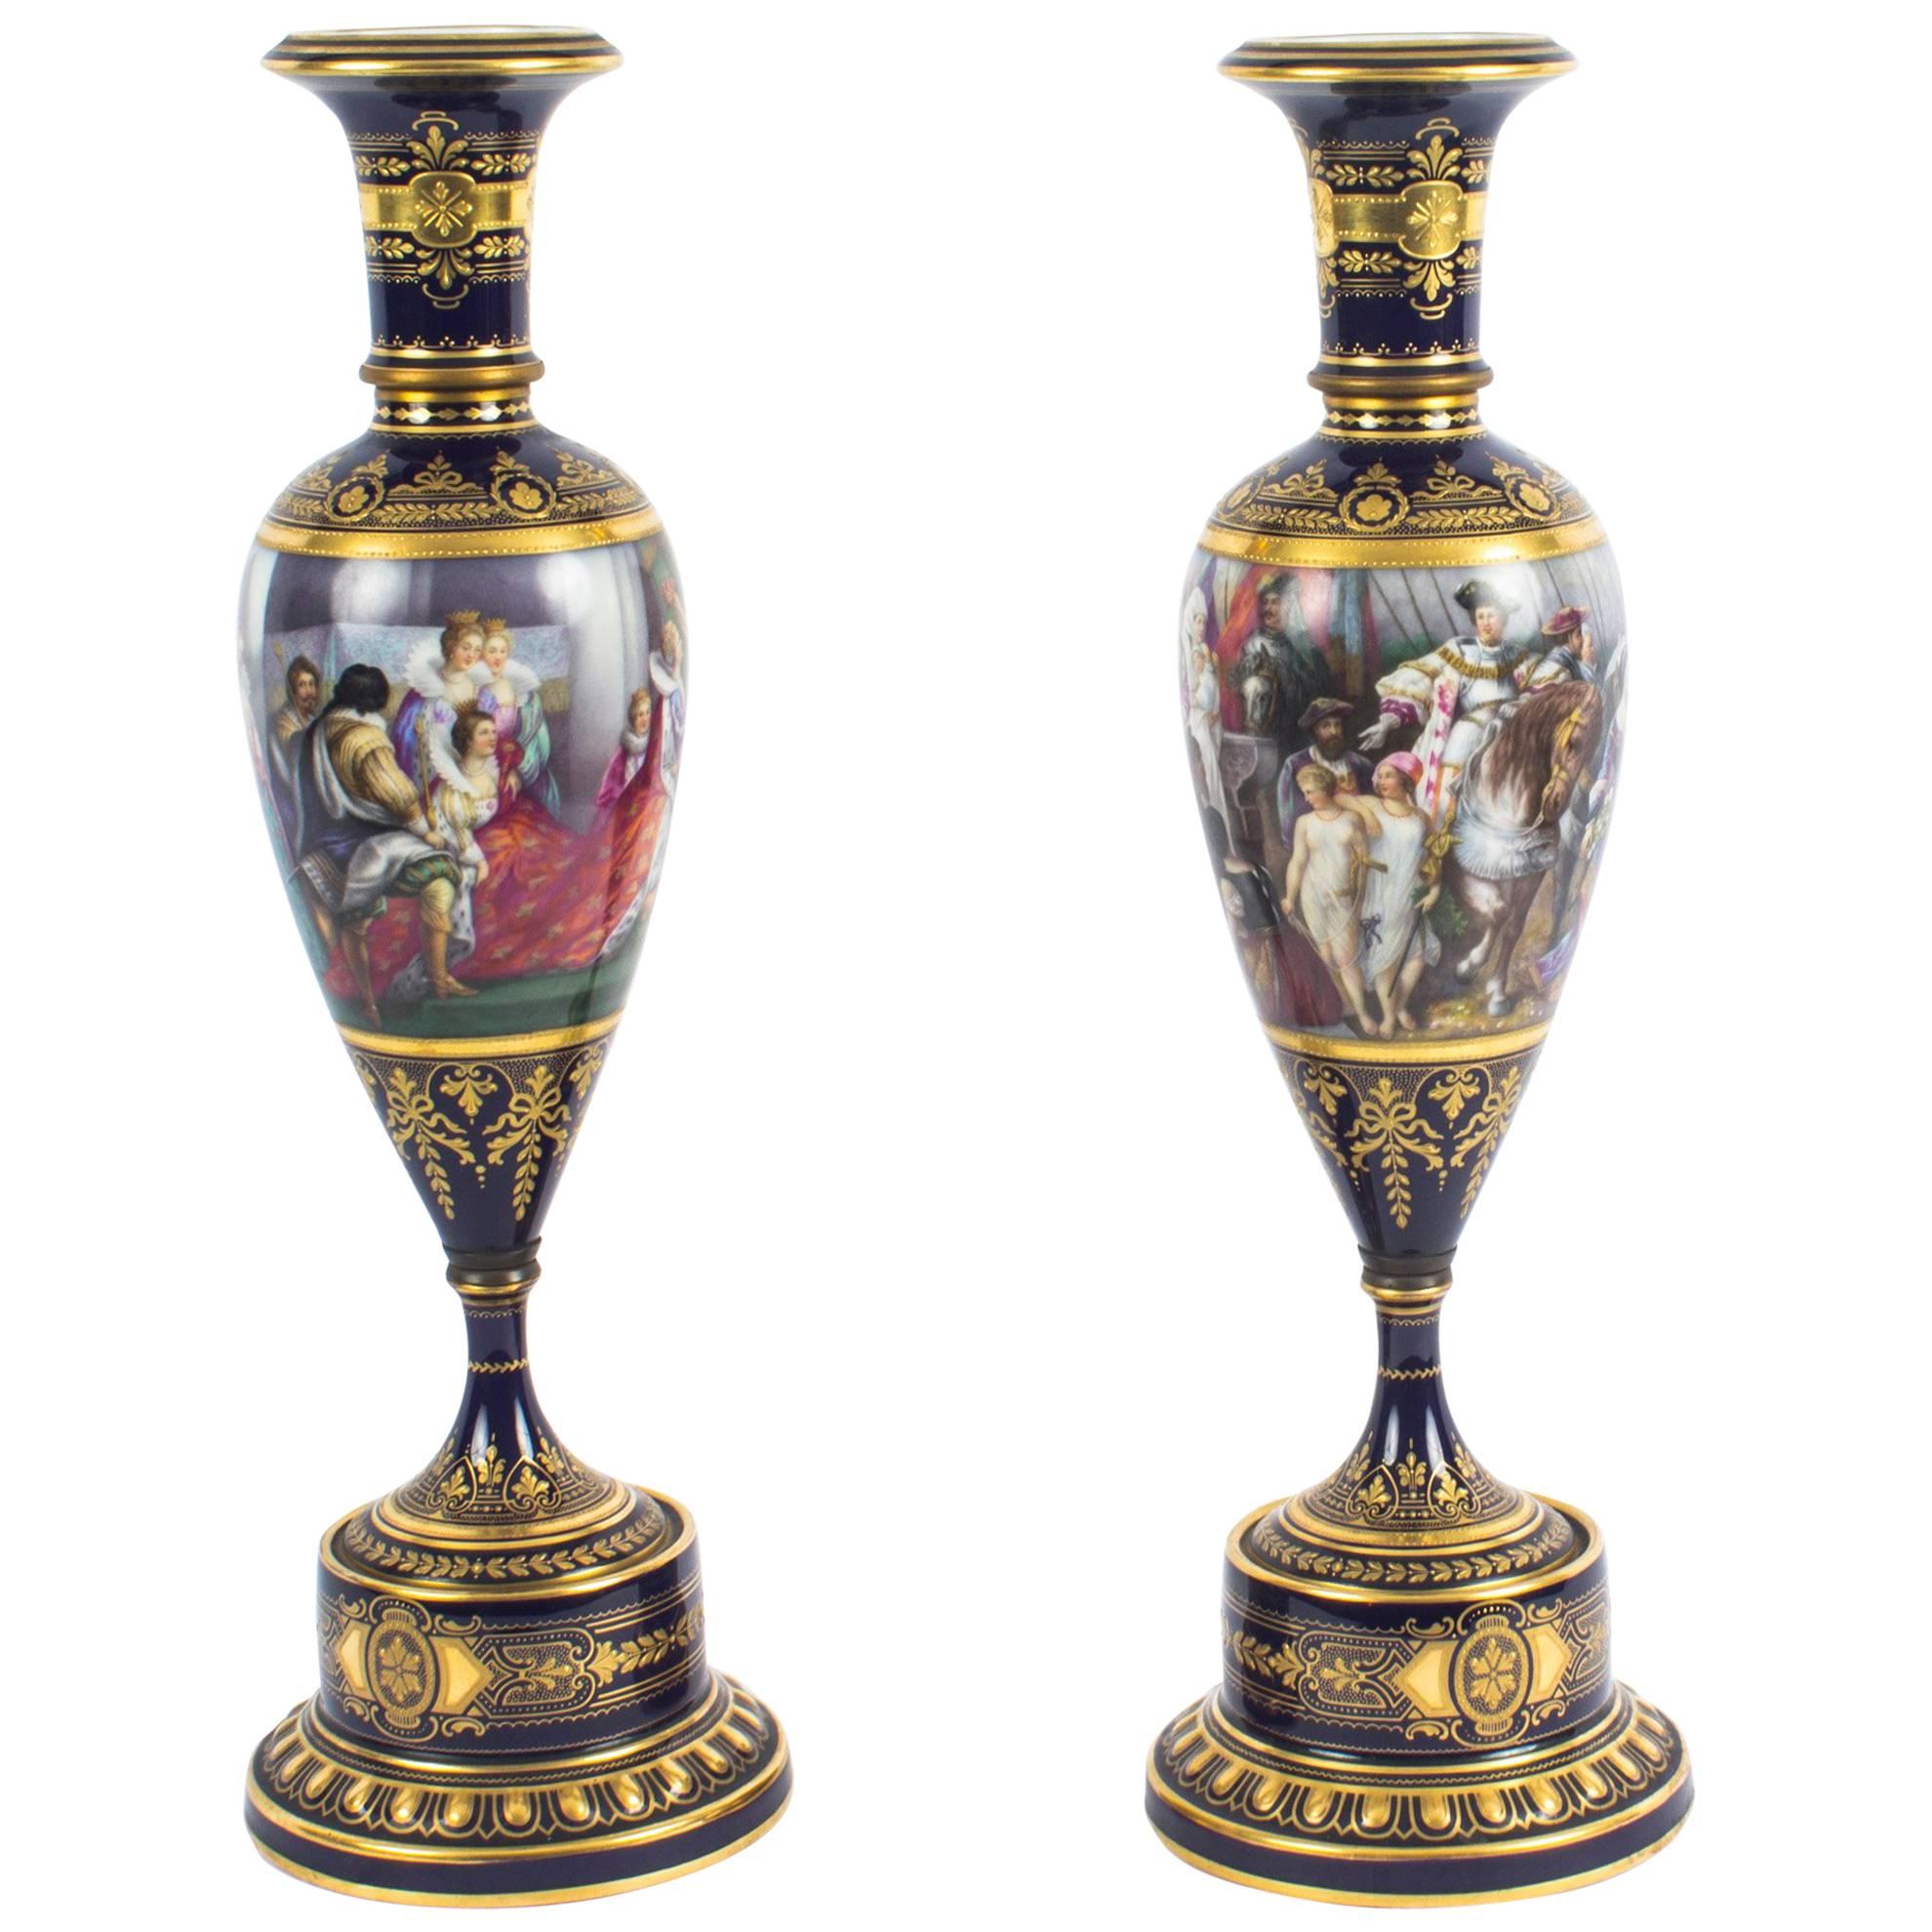 Antique Pair of Vienna Porcelain Pedestal Vases on Stands, 19th Century